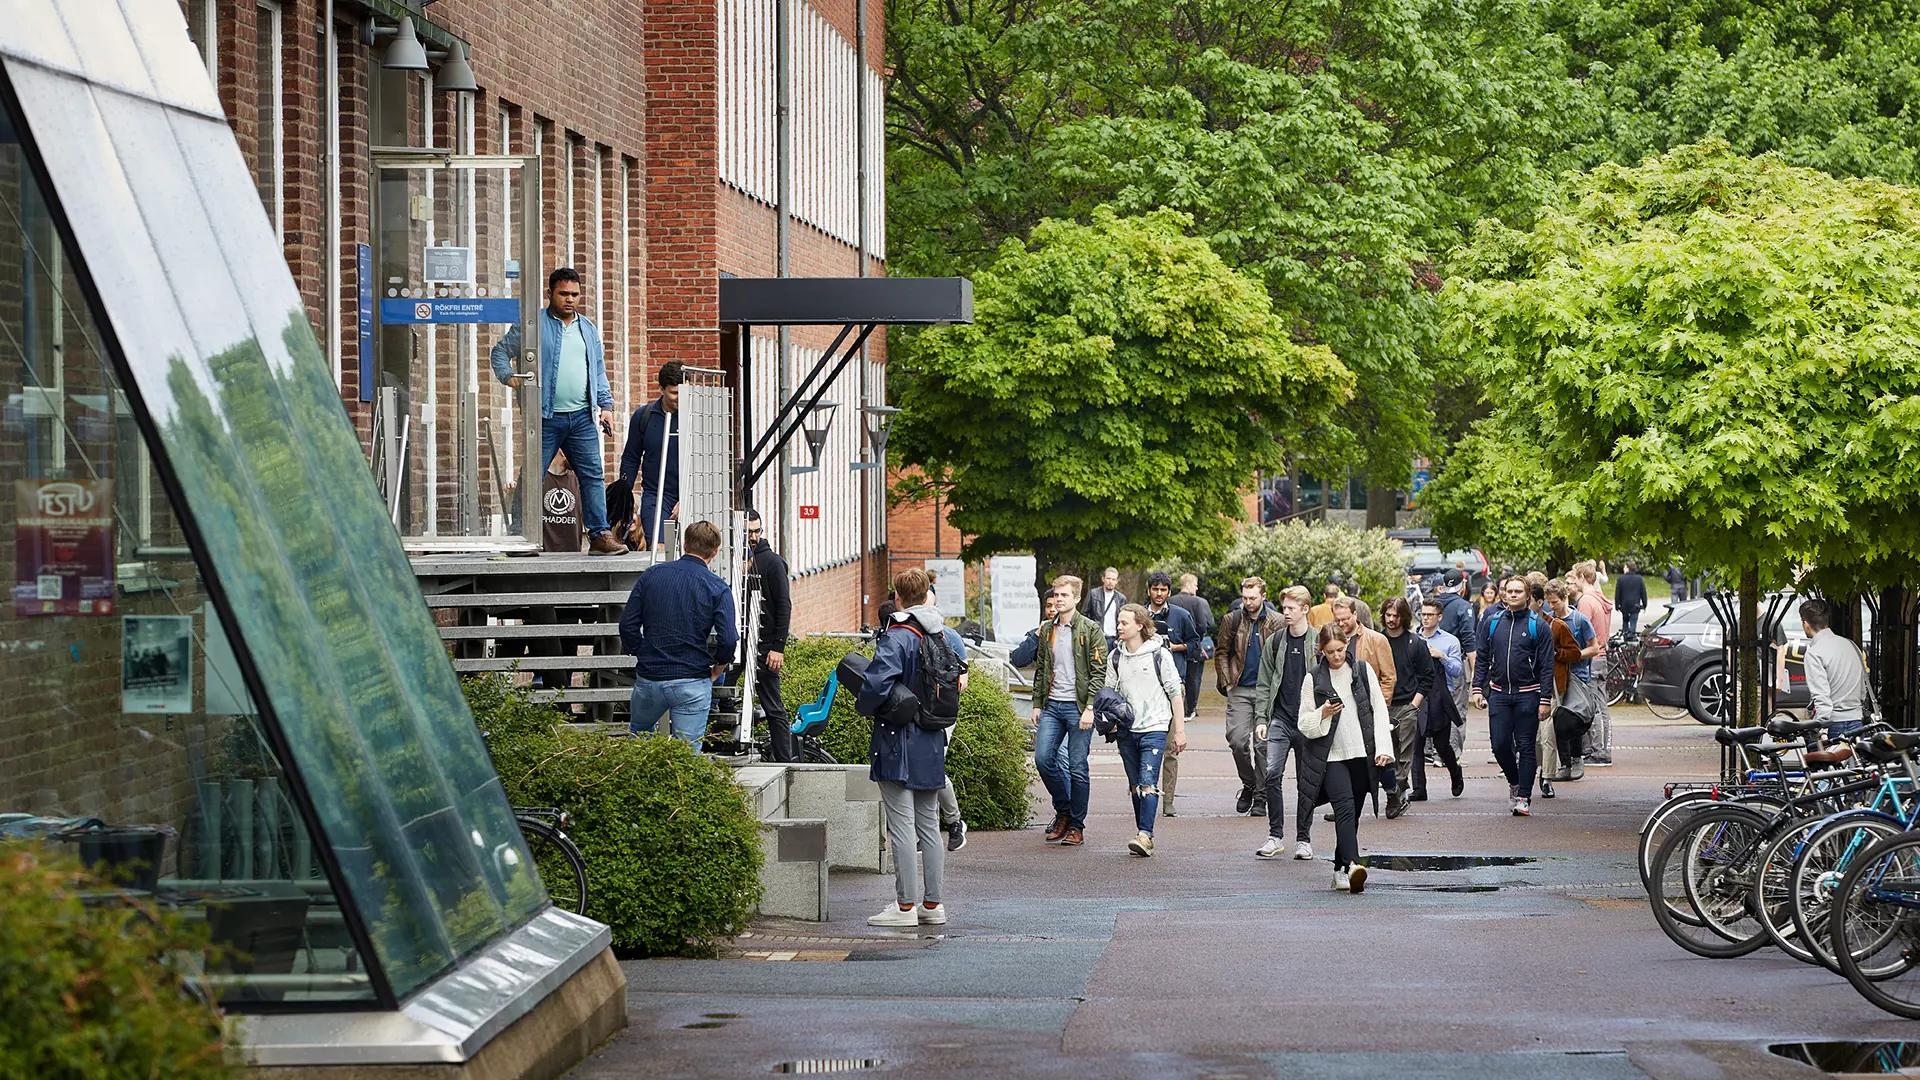 Students on the Johanneberg campus